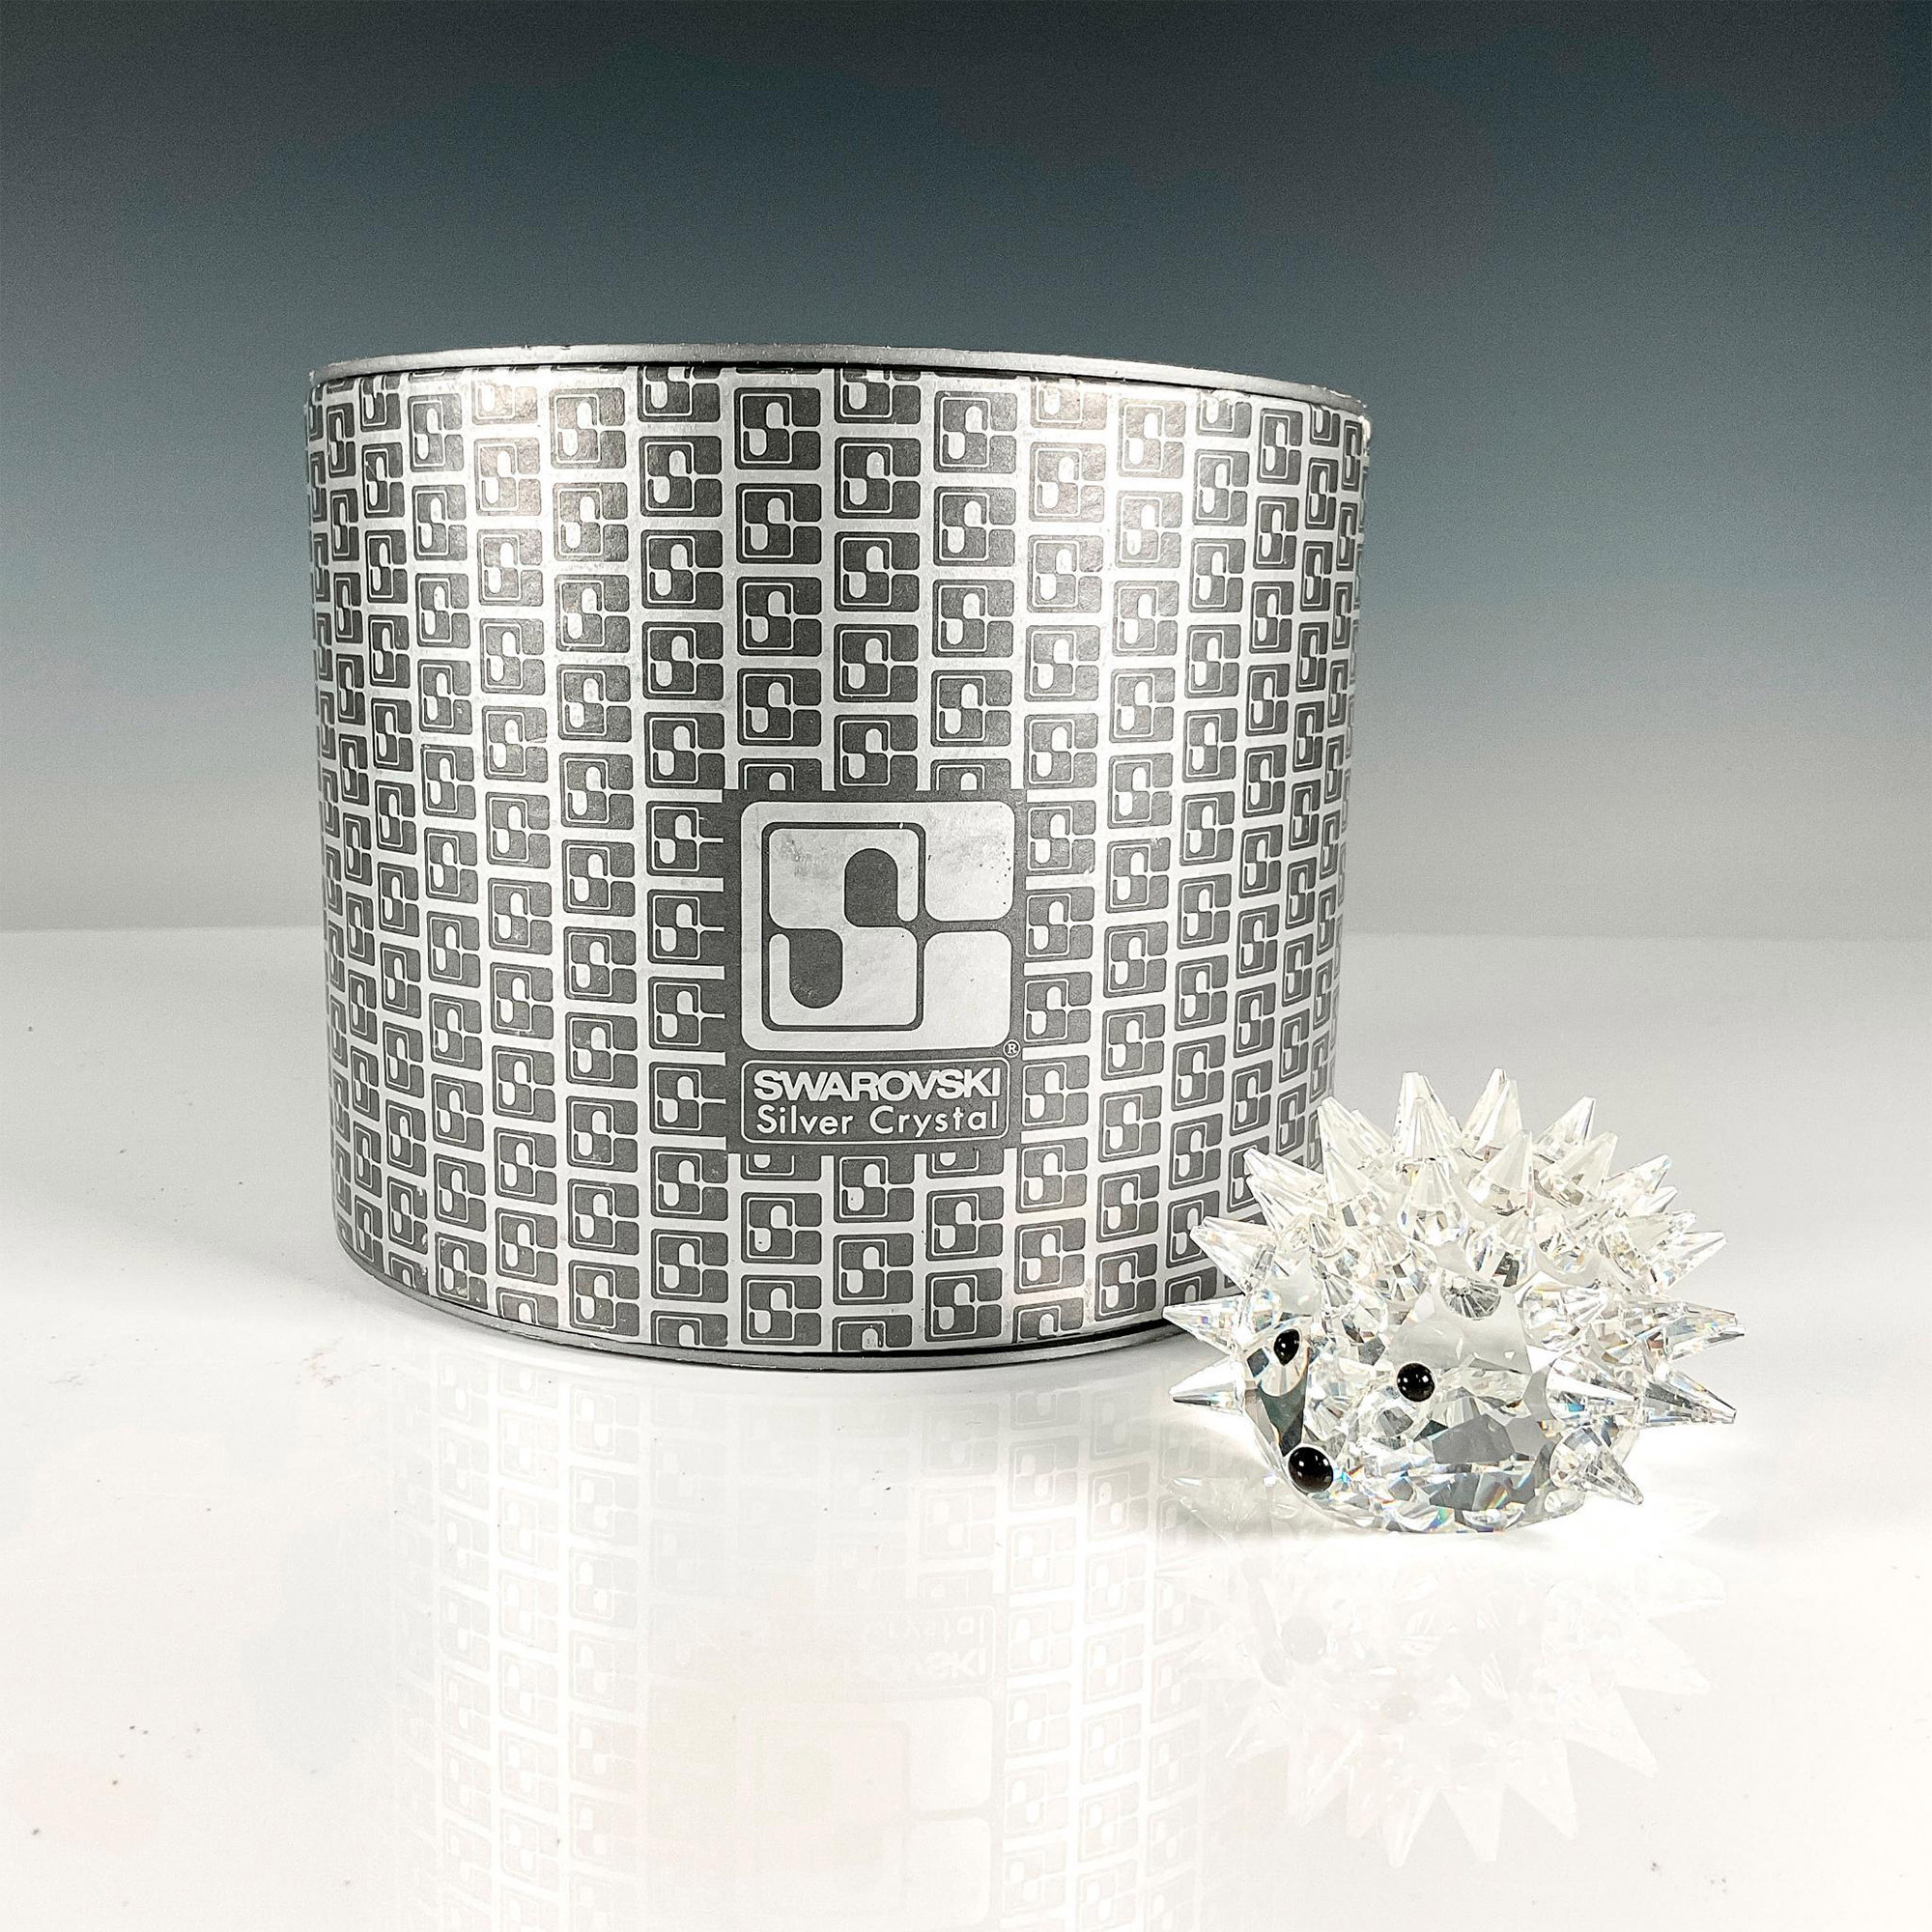 Swarovski Silver Crystal Figurine, Hedgehog - Image 4 of 4